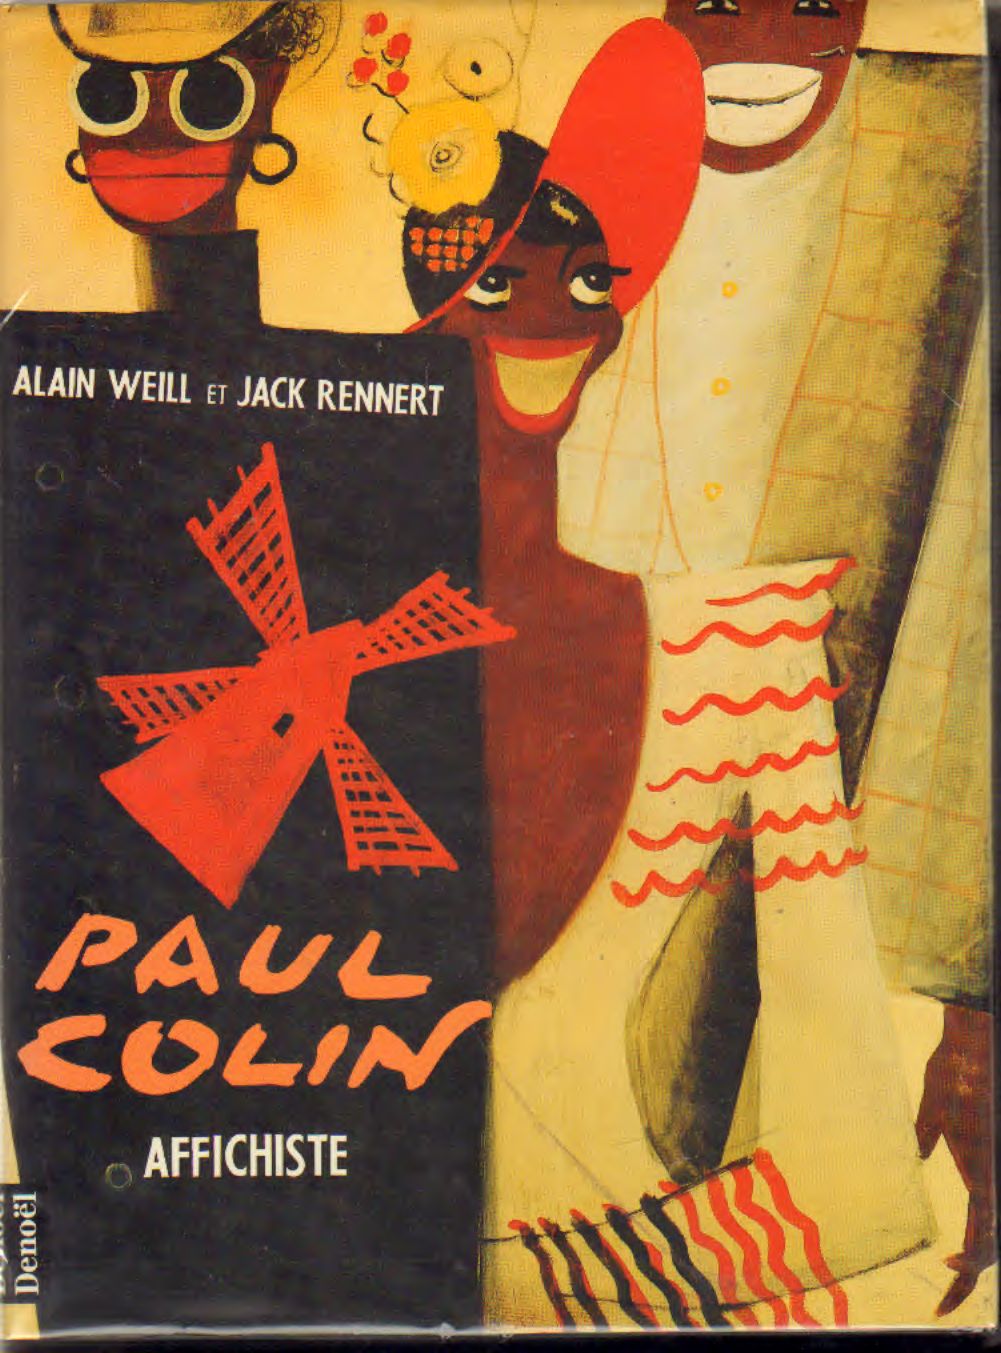 Colin - Paul Colin affichiste